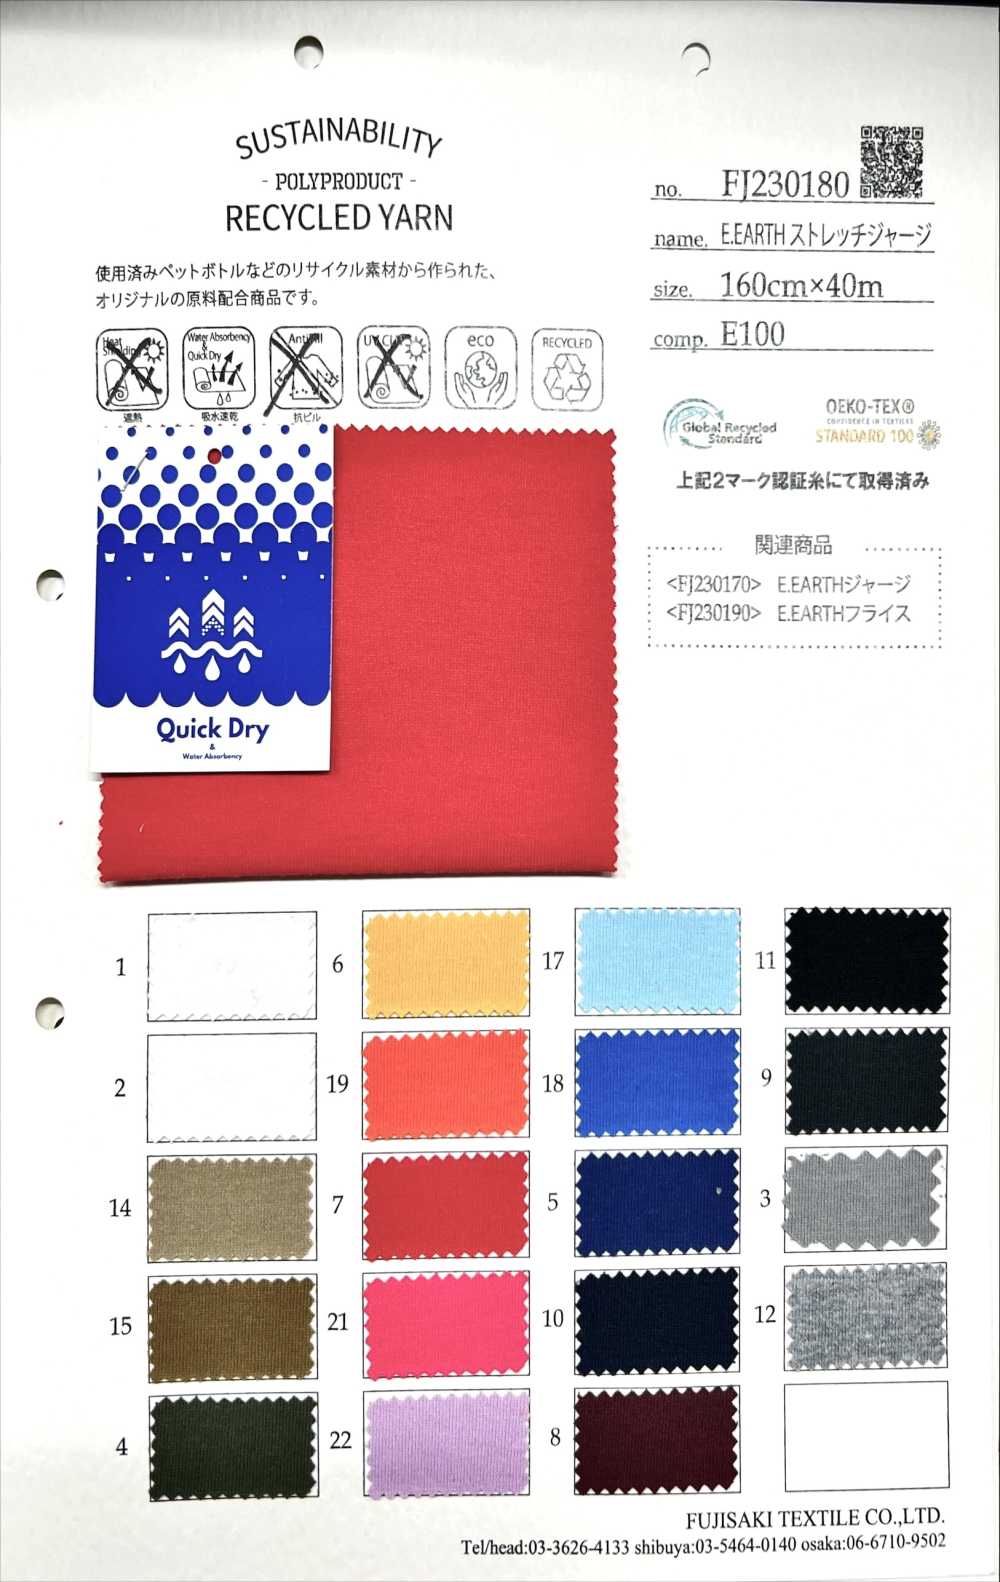 FJ230180 Maillot Elástico E.EARTH[Fabrica Textil] Fujisaki Textile